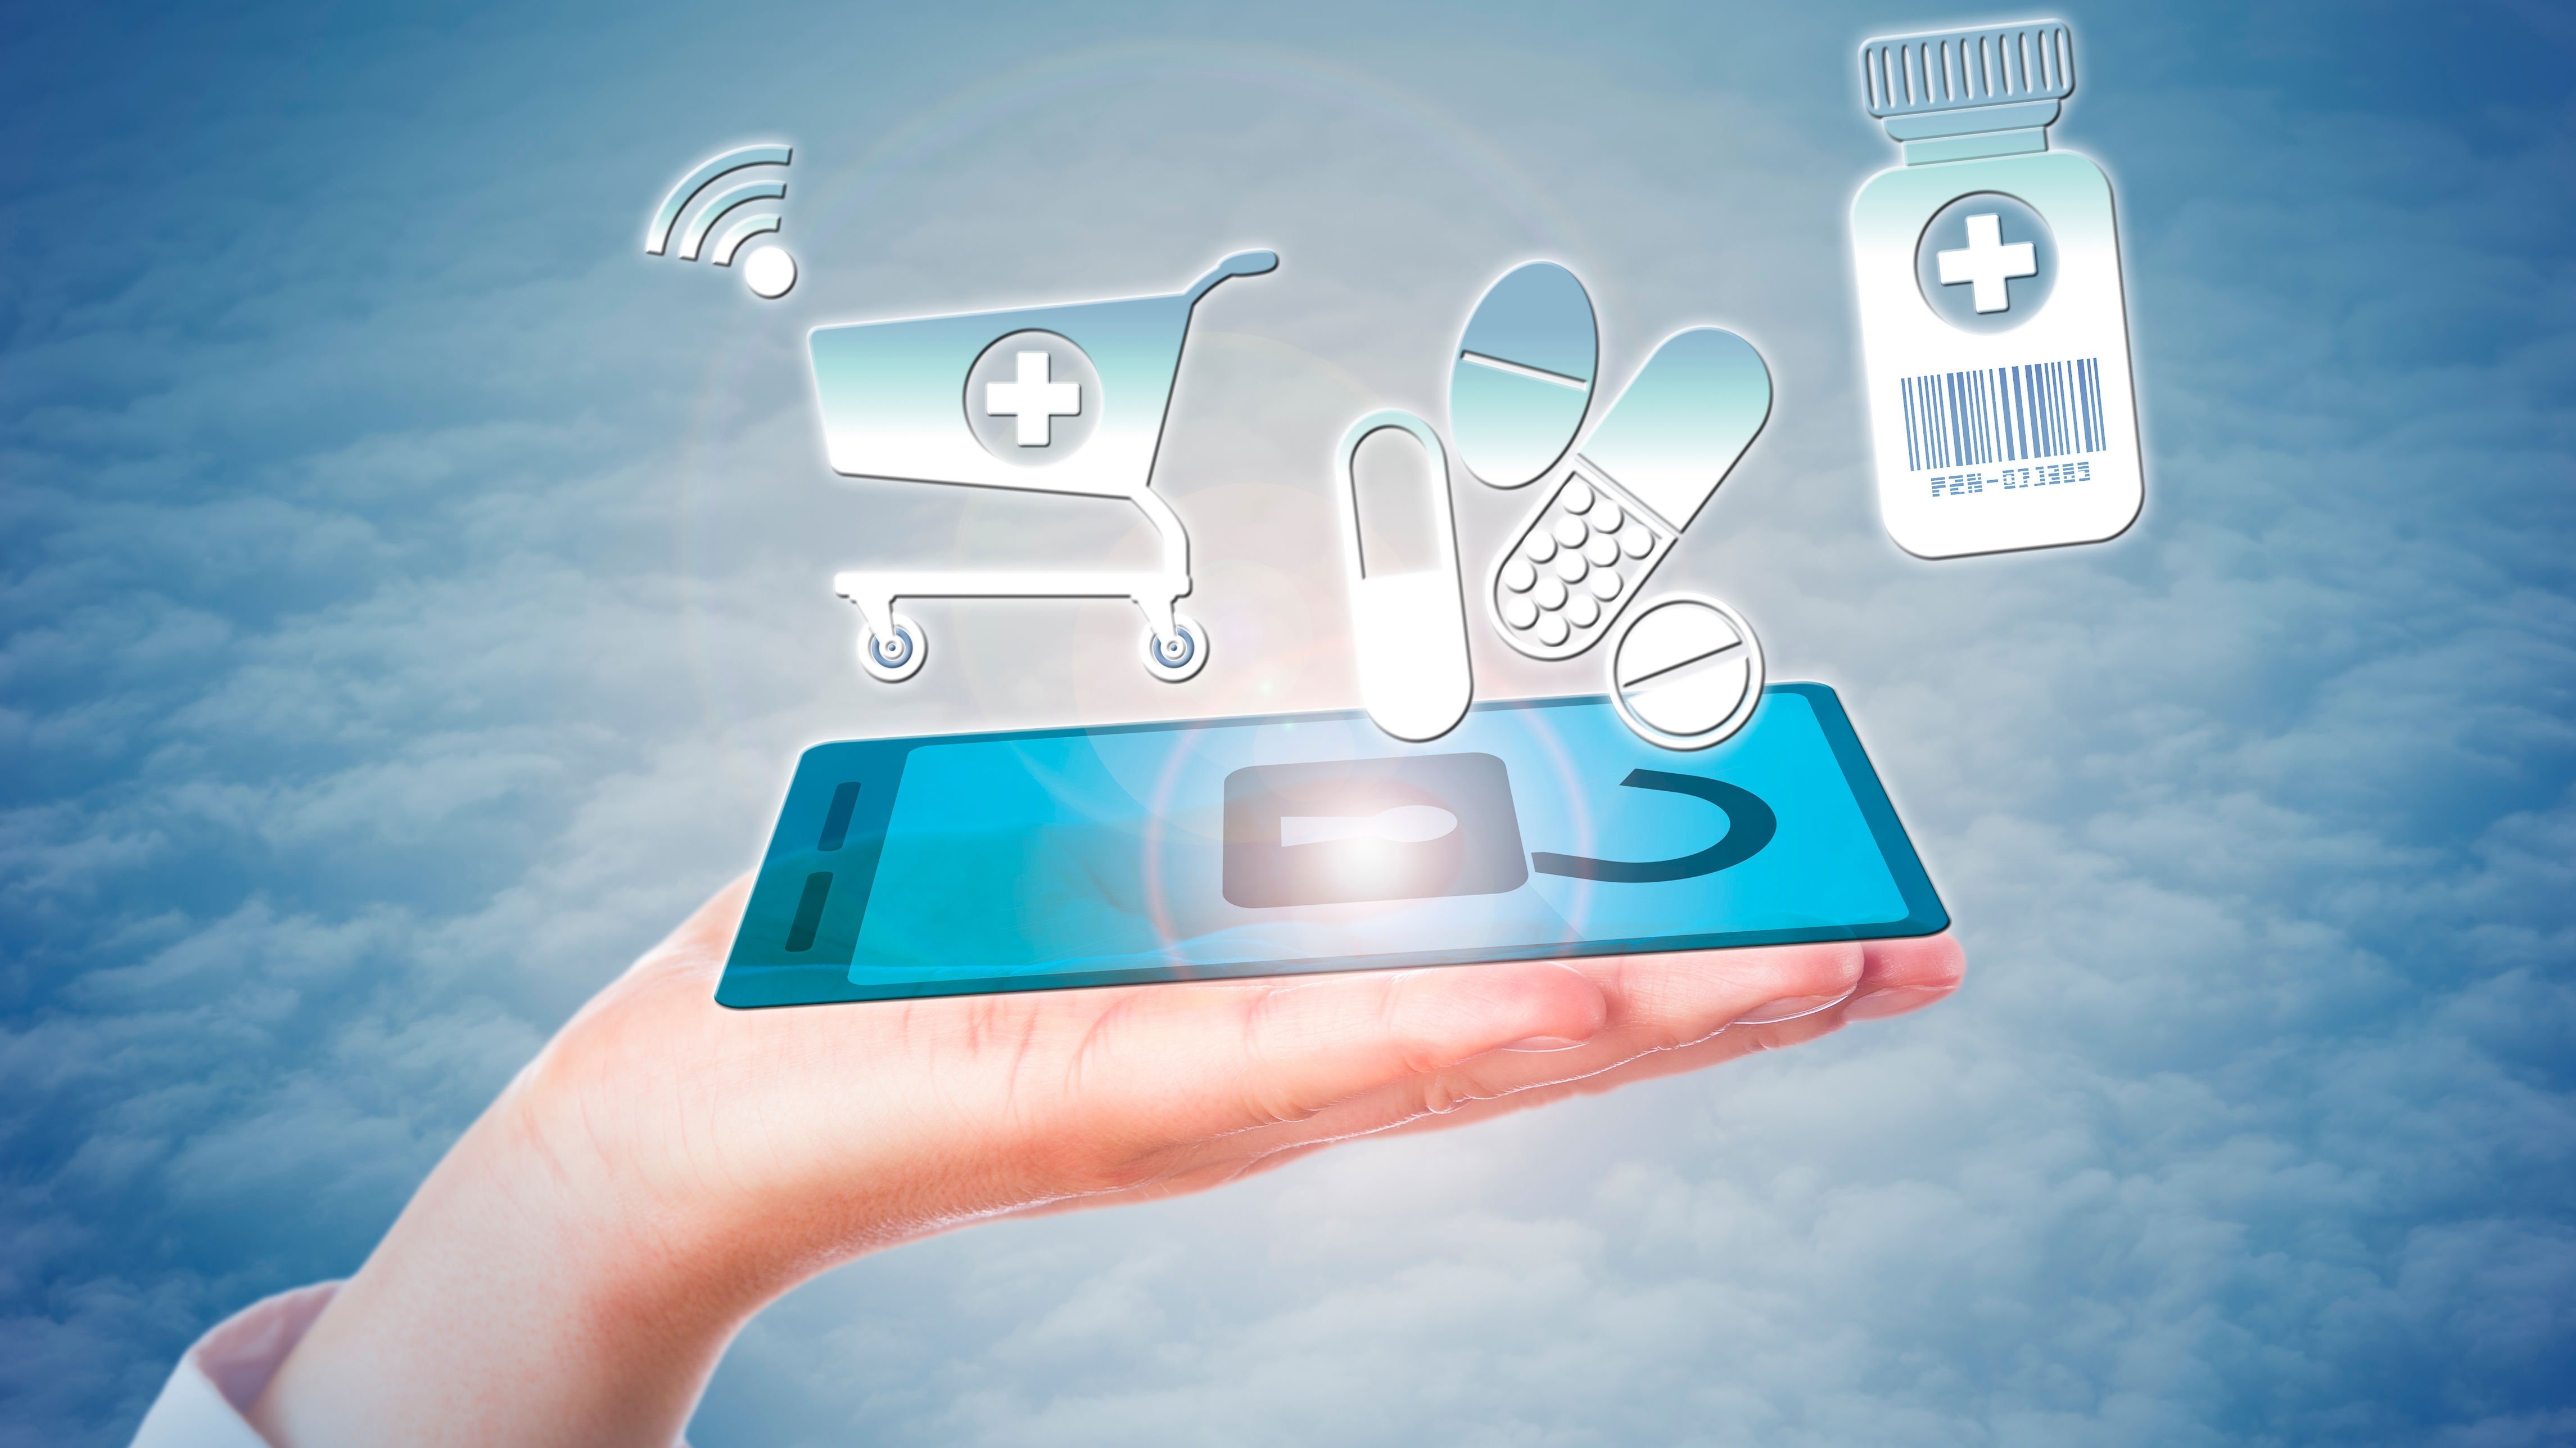 e-rezept: krankenkassen planen integration in elektronische patientenakte